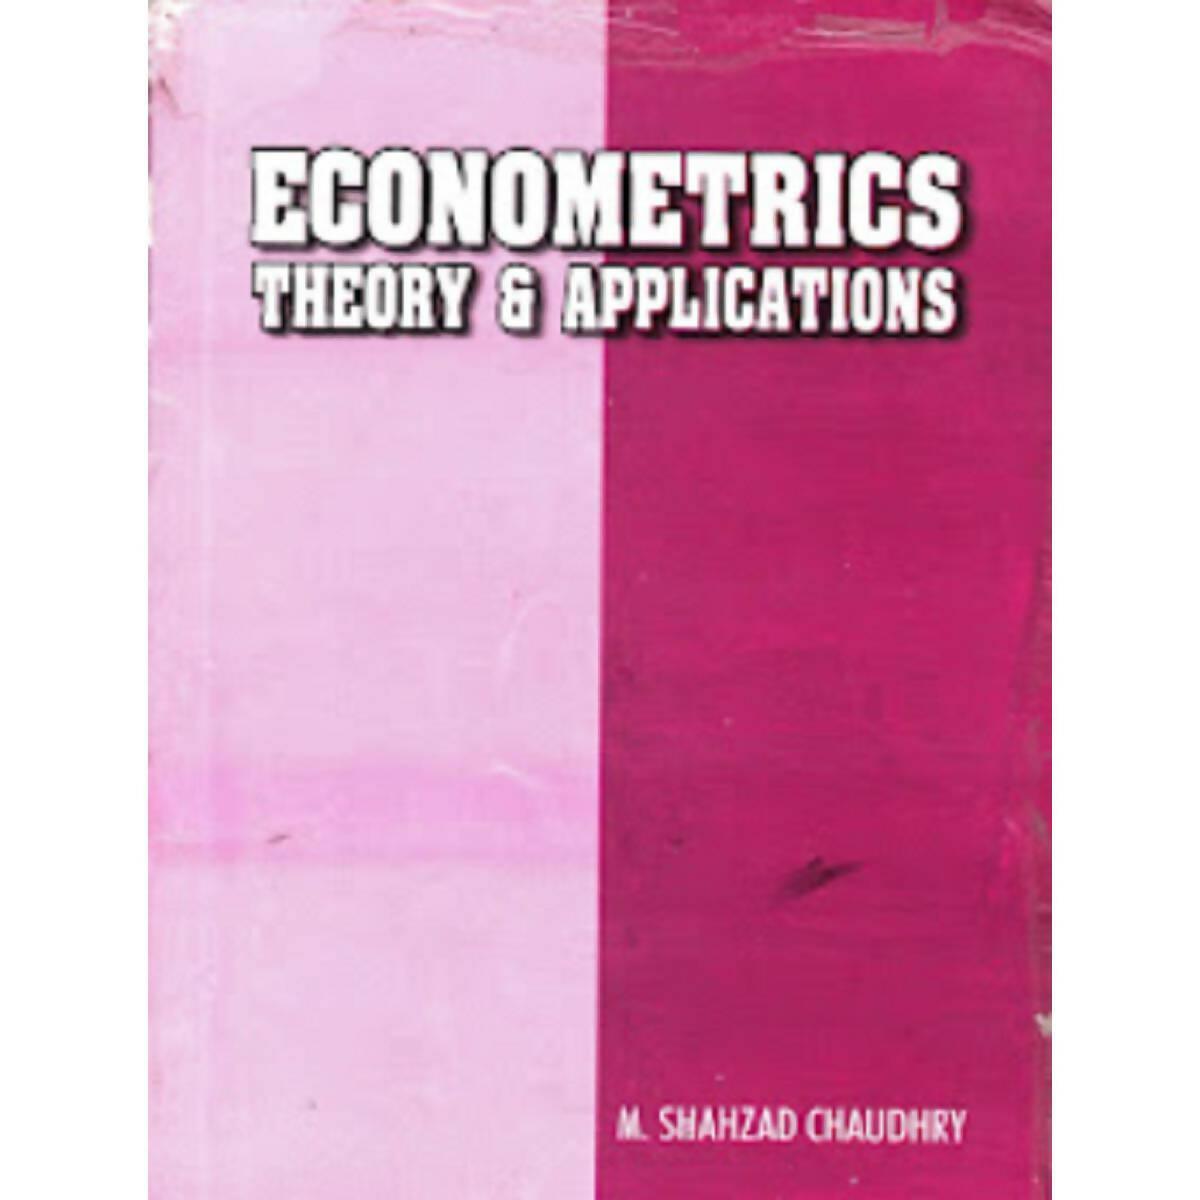 Econometrics Theory & Applications For MA 2 By M Shahzad Chaudhry - ValueBox